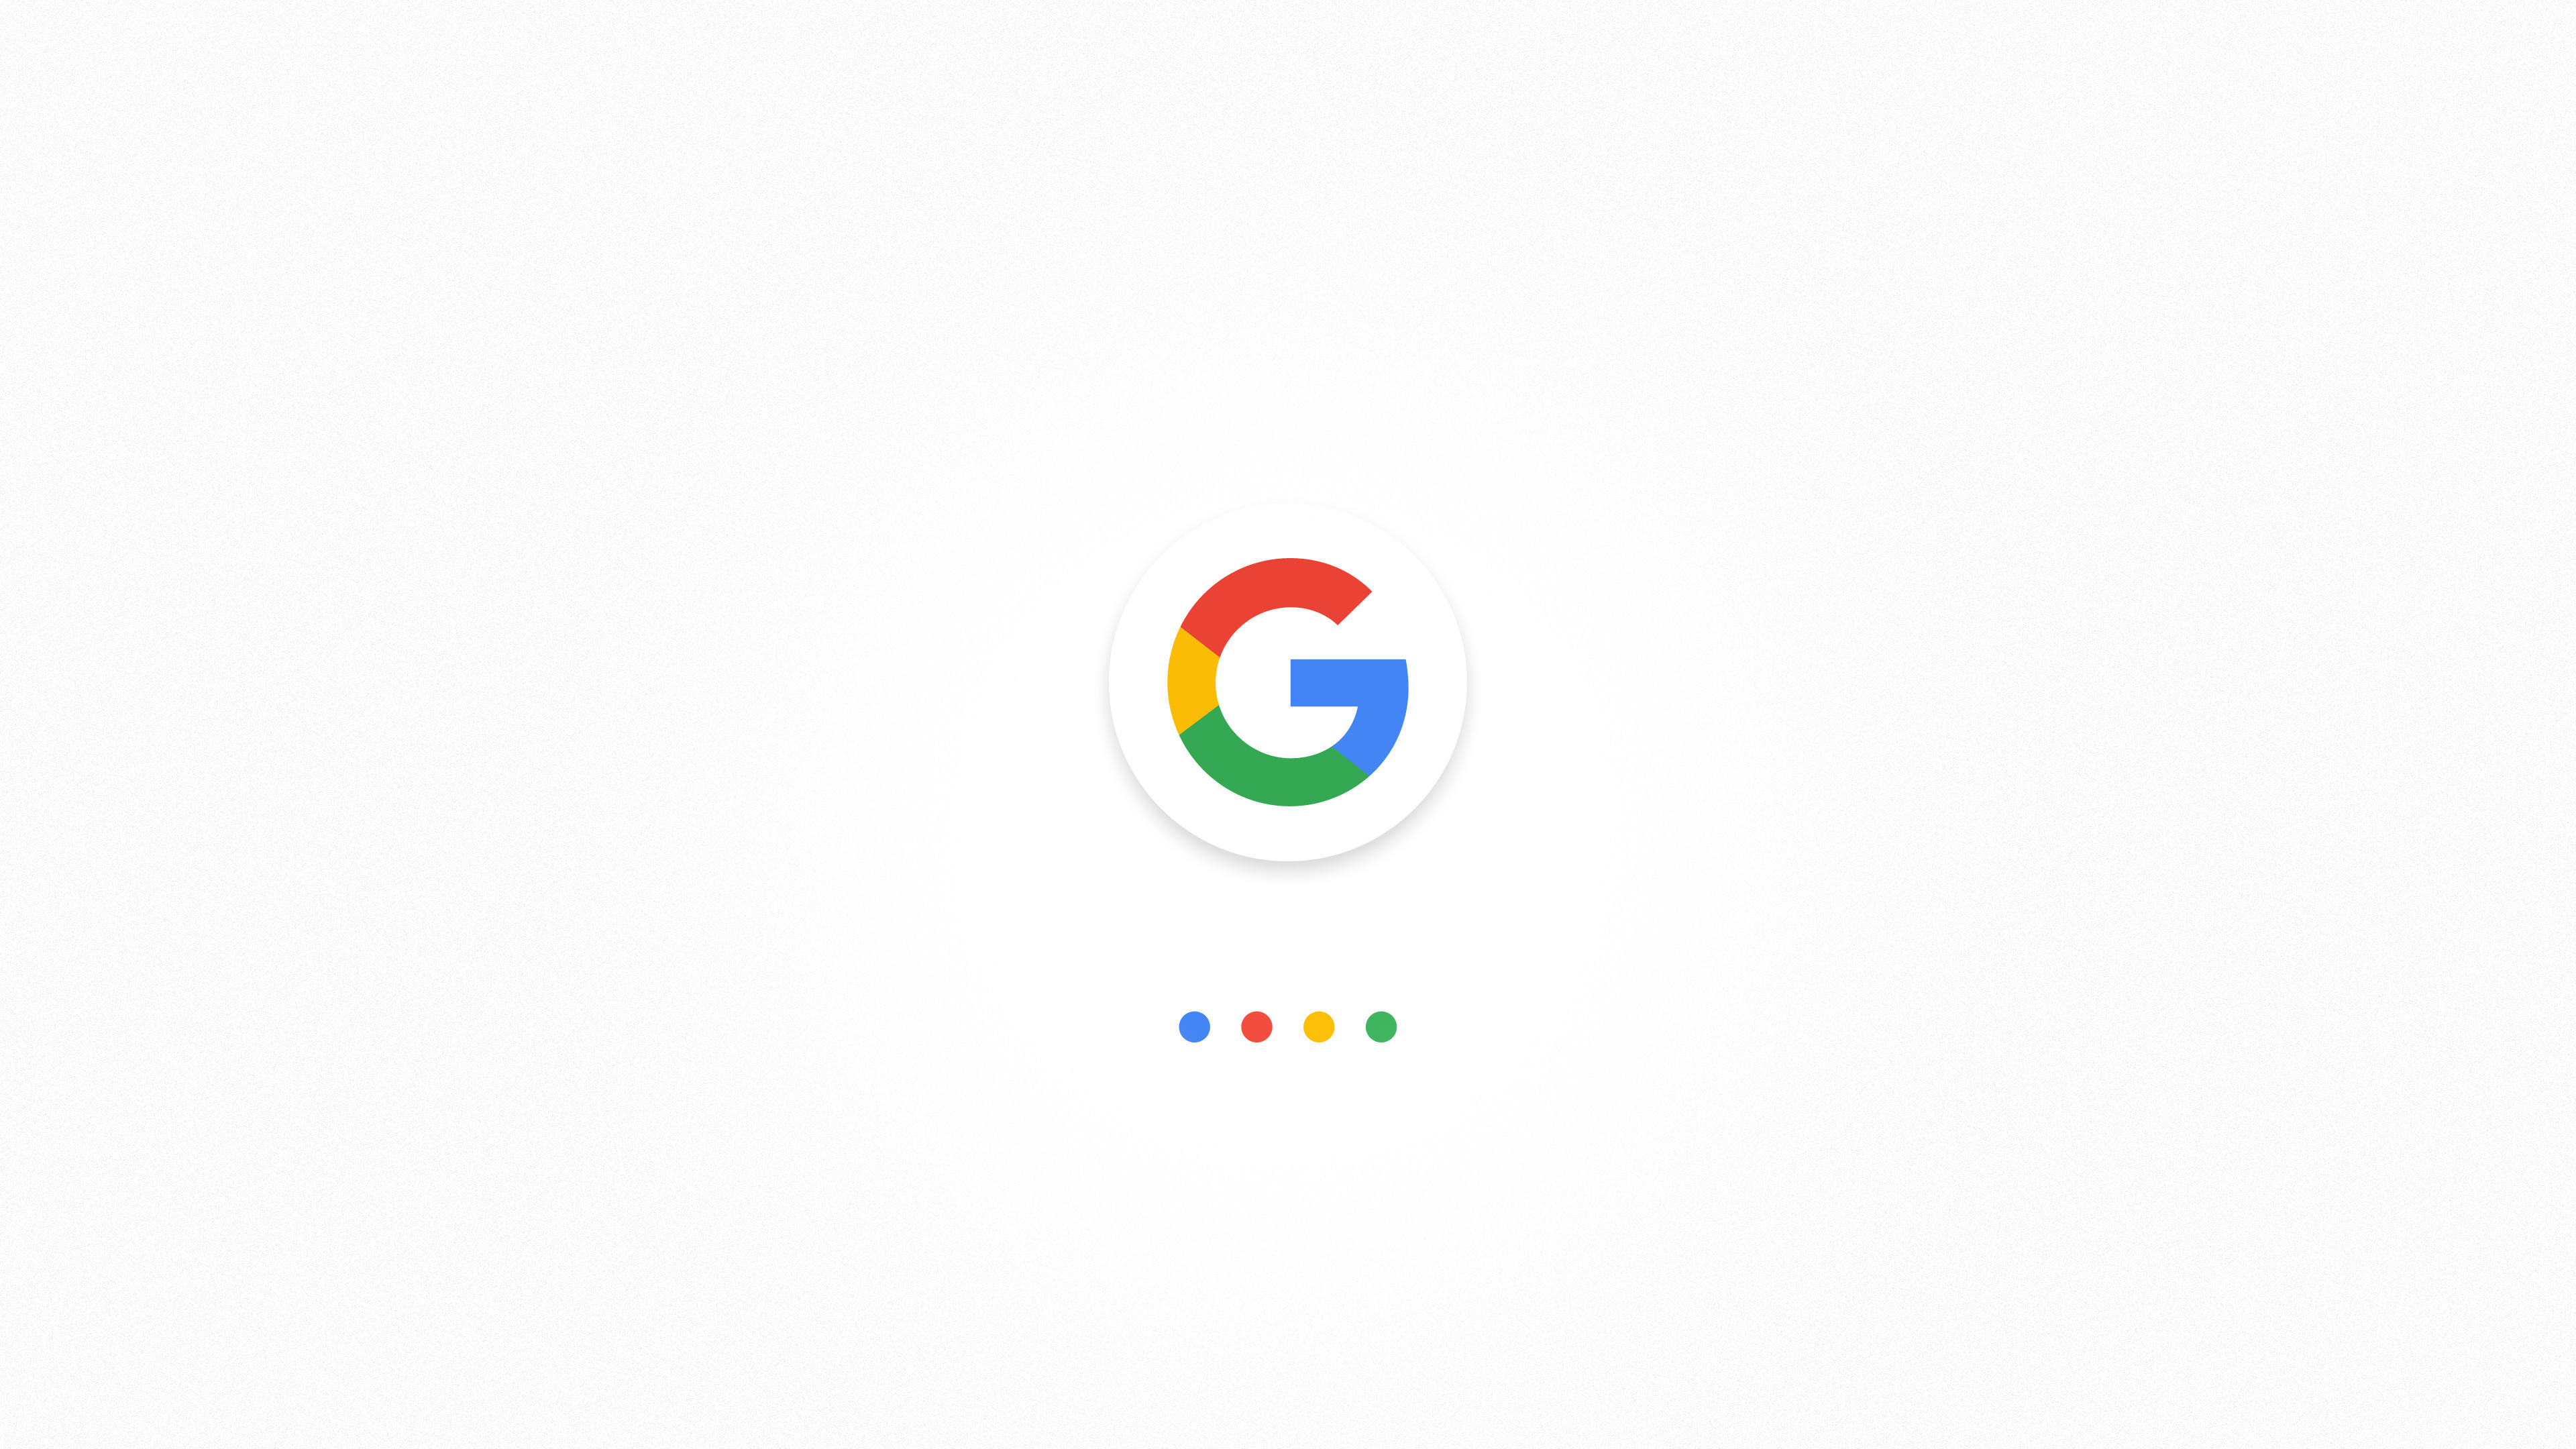 Google Wallpaper Backgrounds (59+ images)